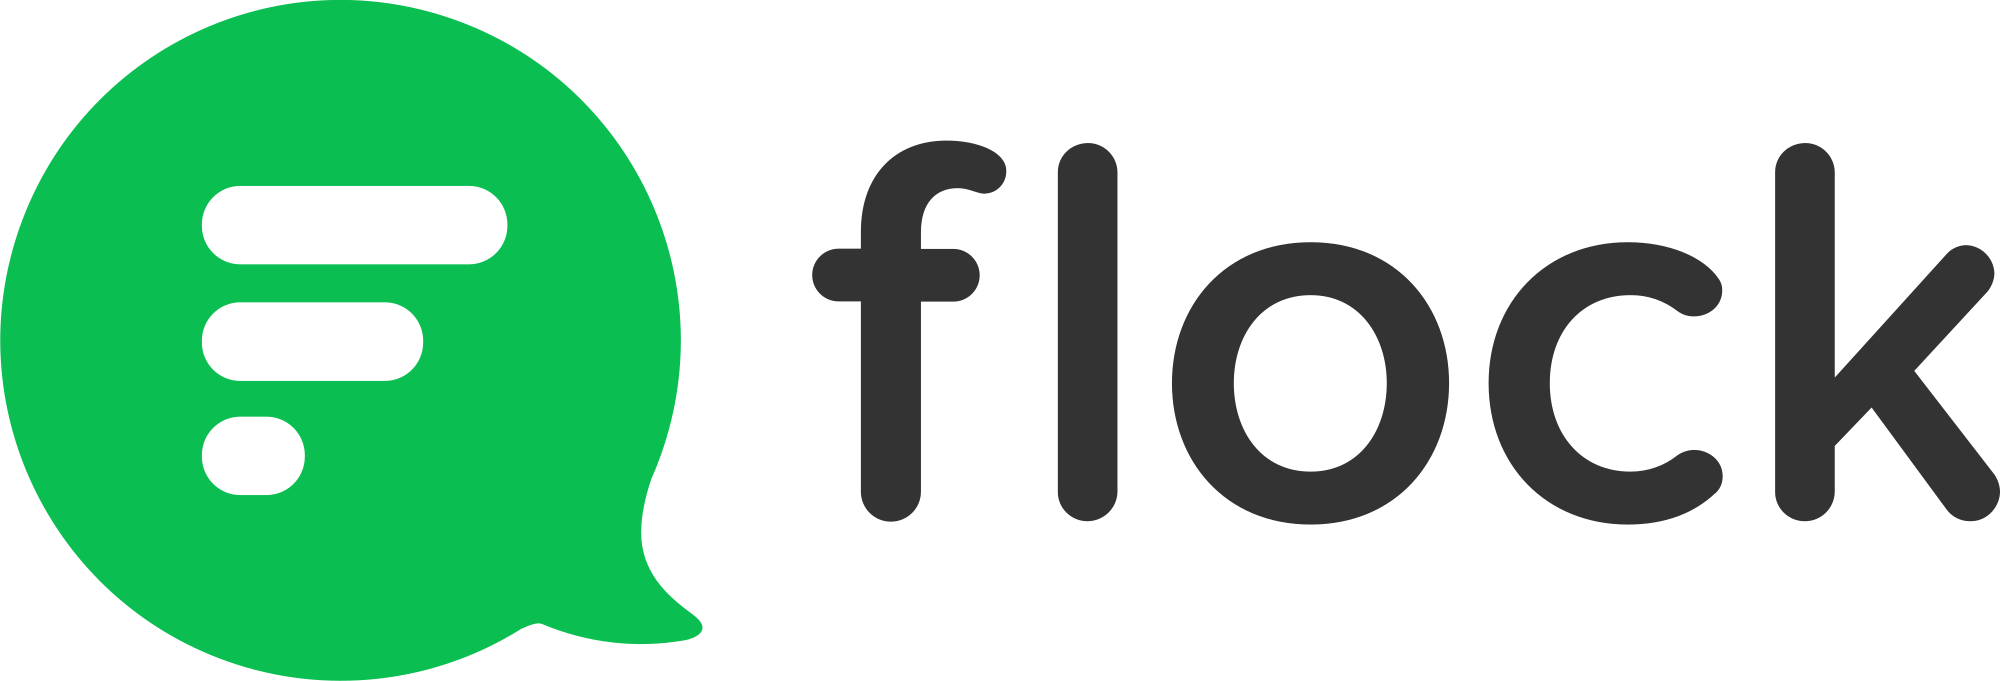 Flock Logo - File:Flock Logo.svg - Wikimedia Commons